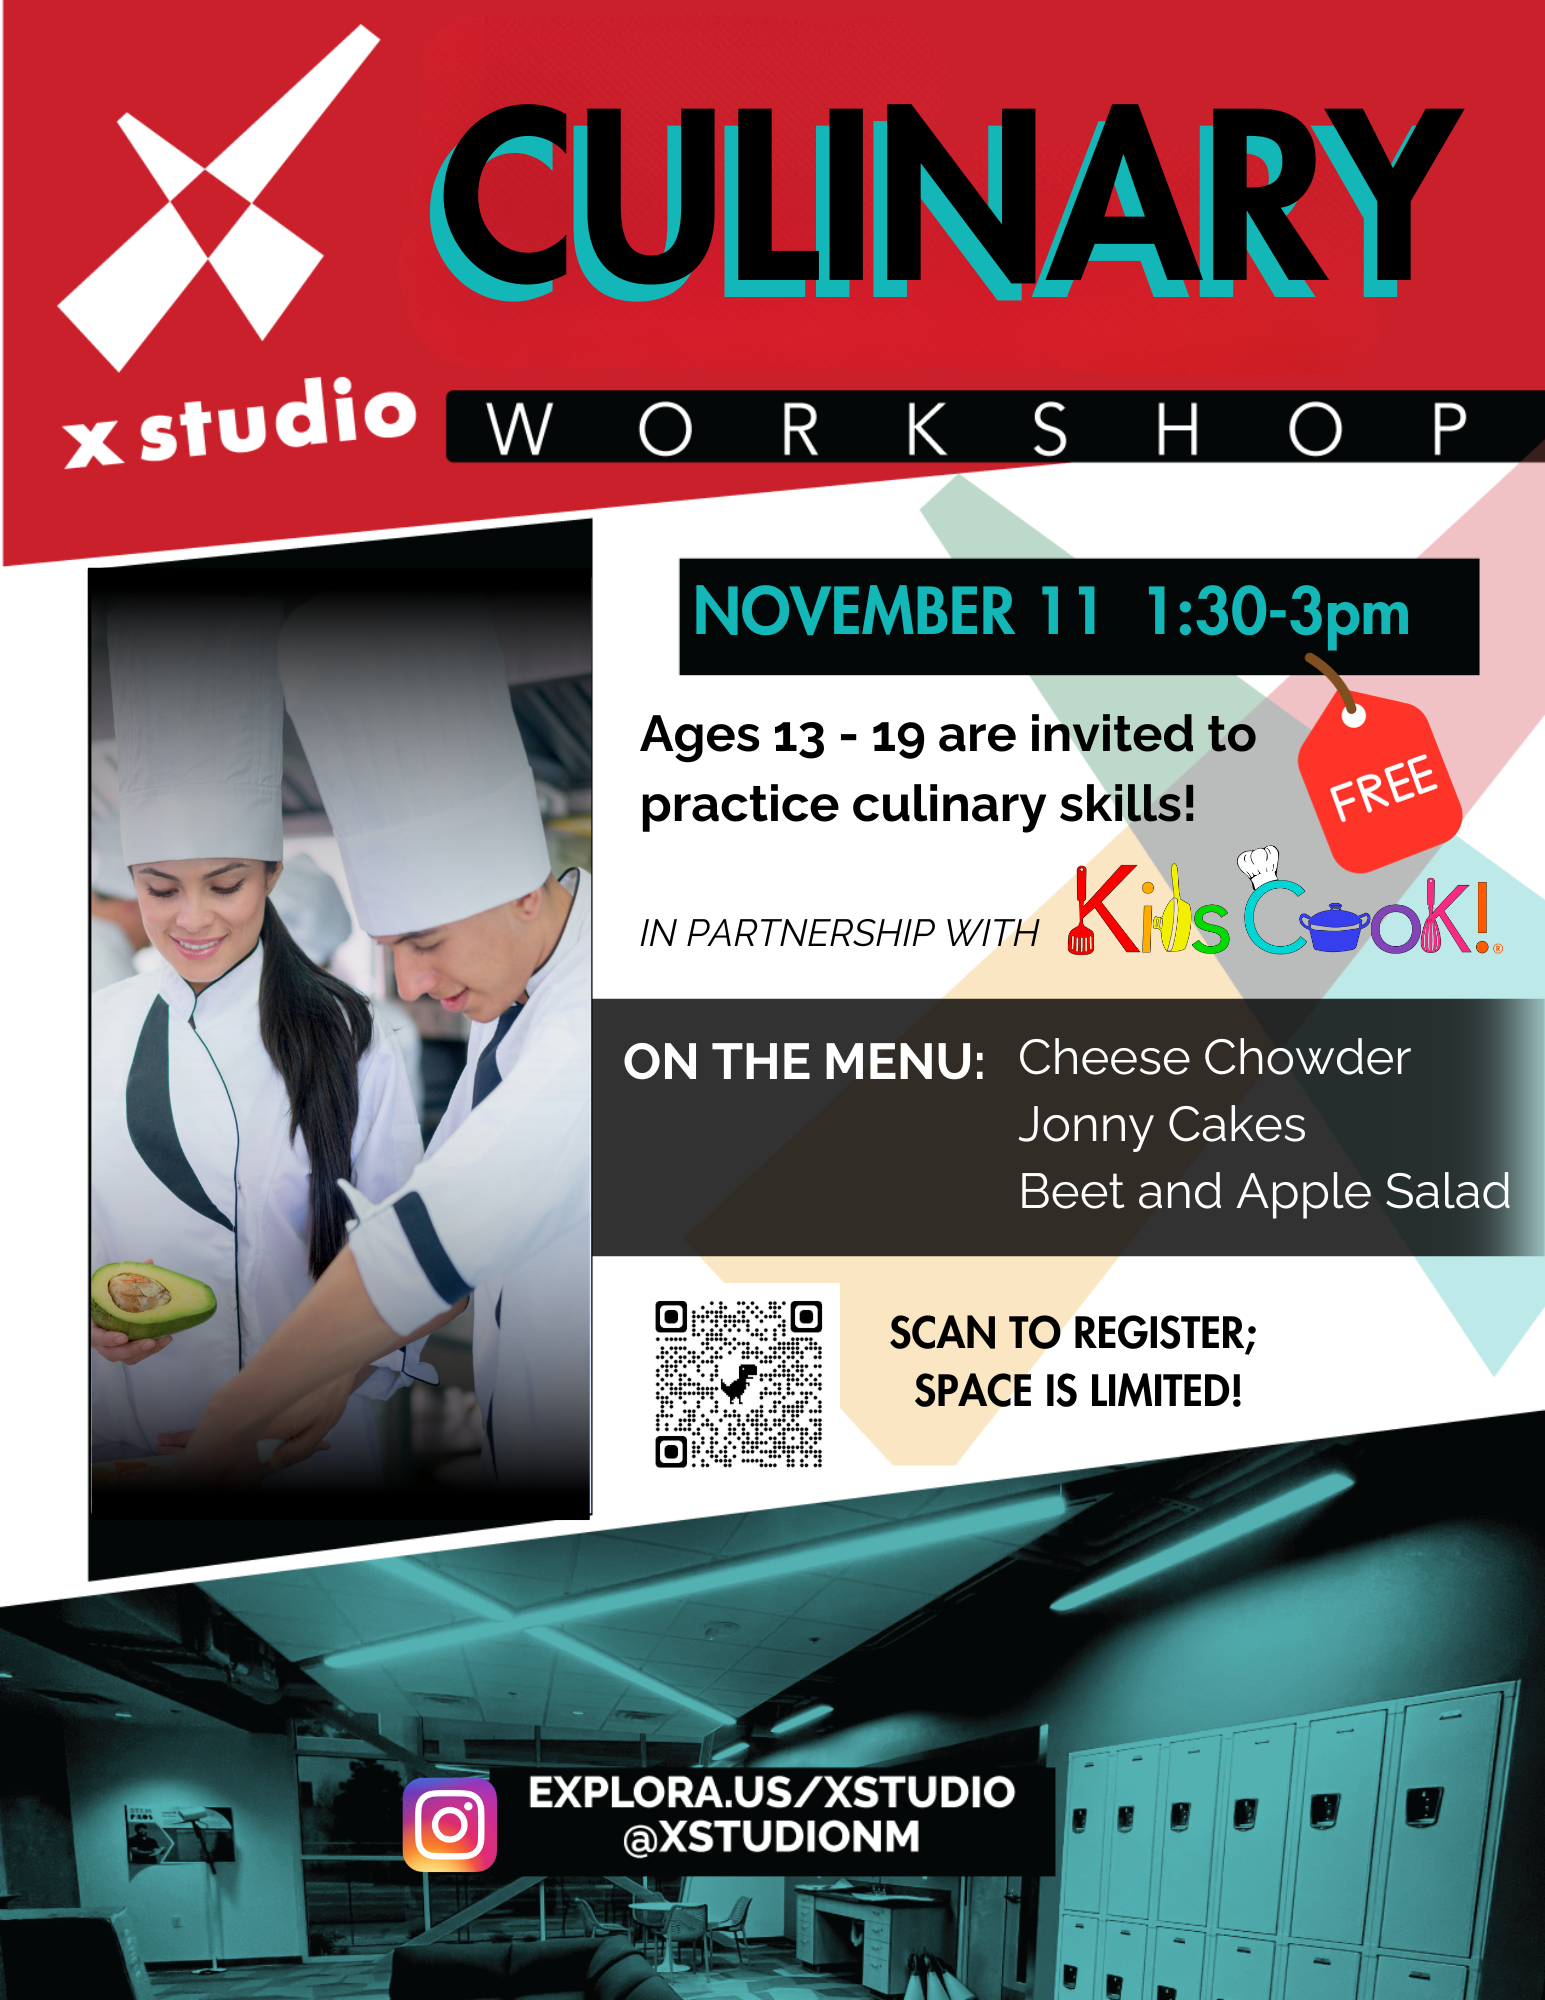 Kids Cook Culinary Workshop Flyer